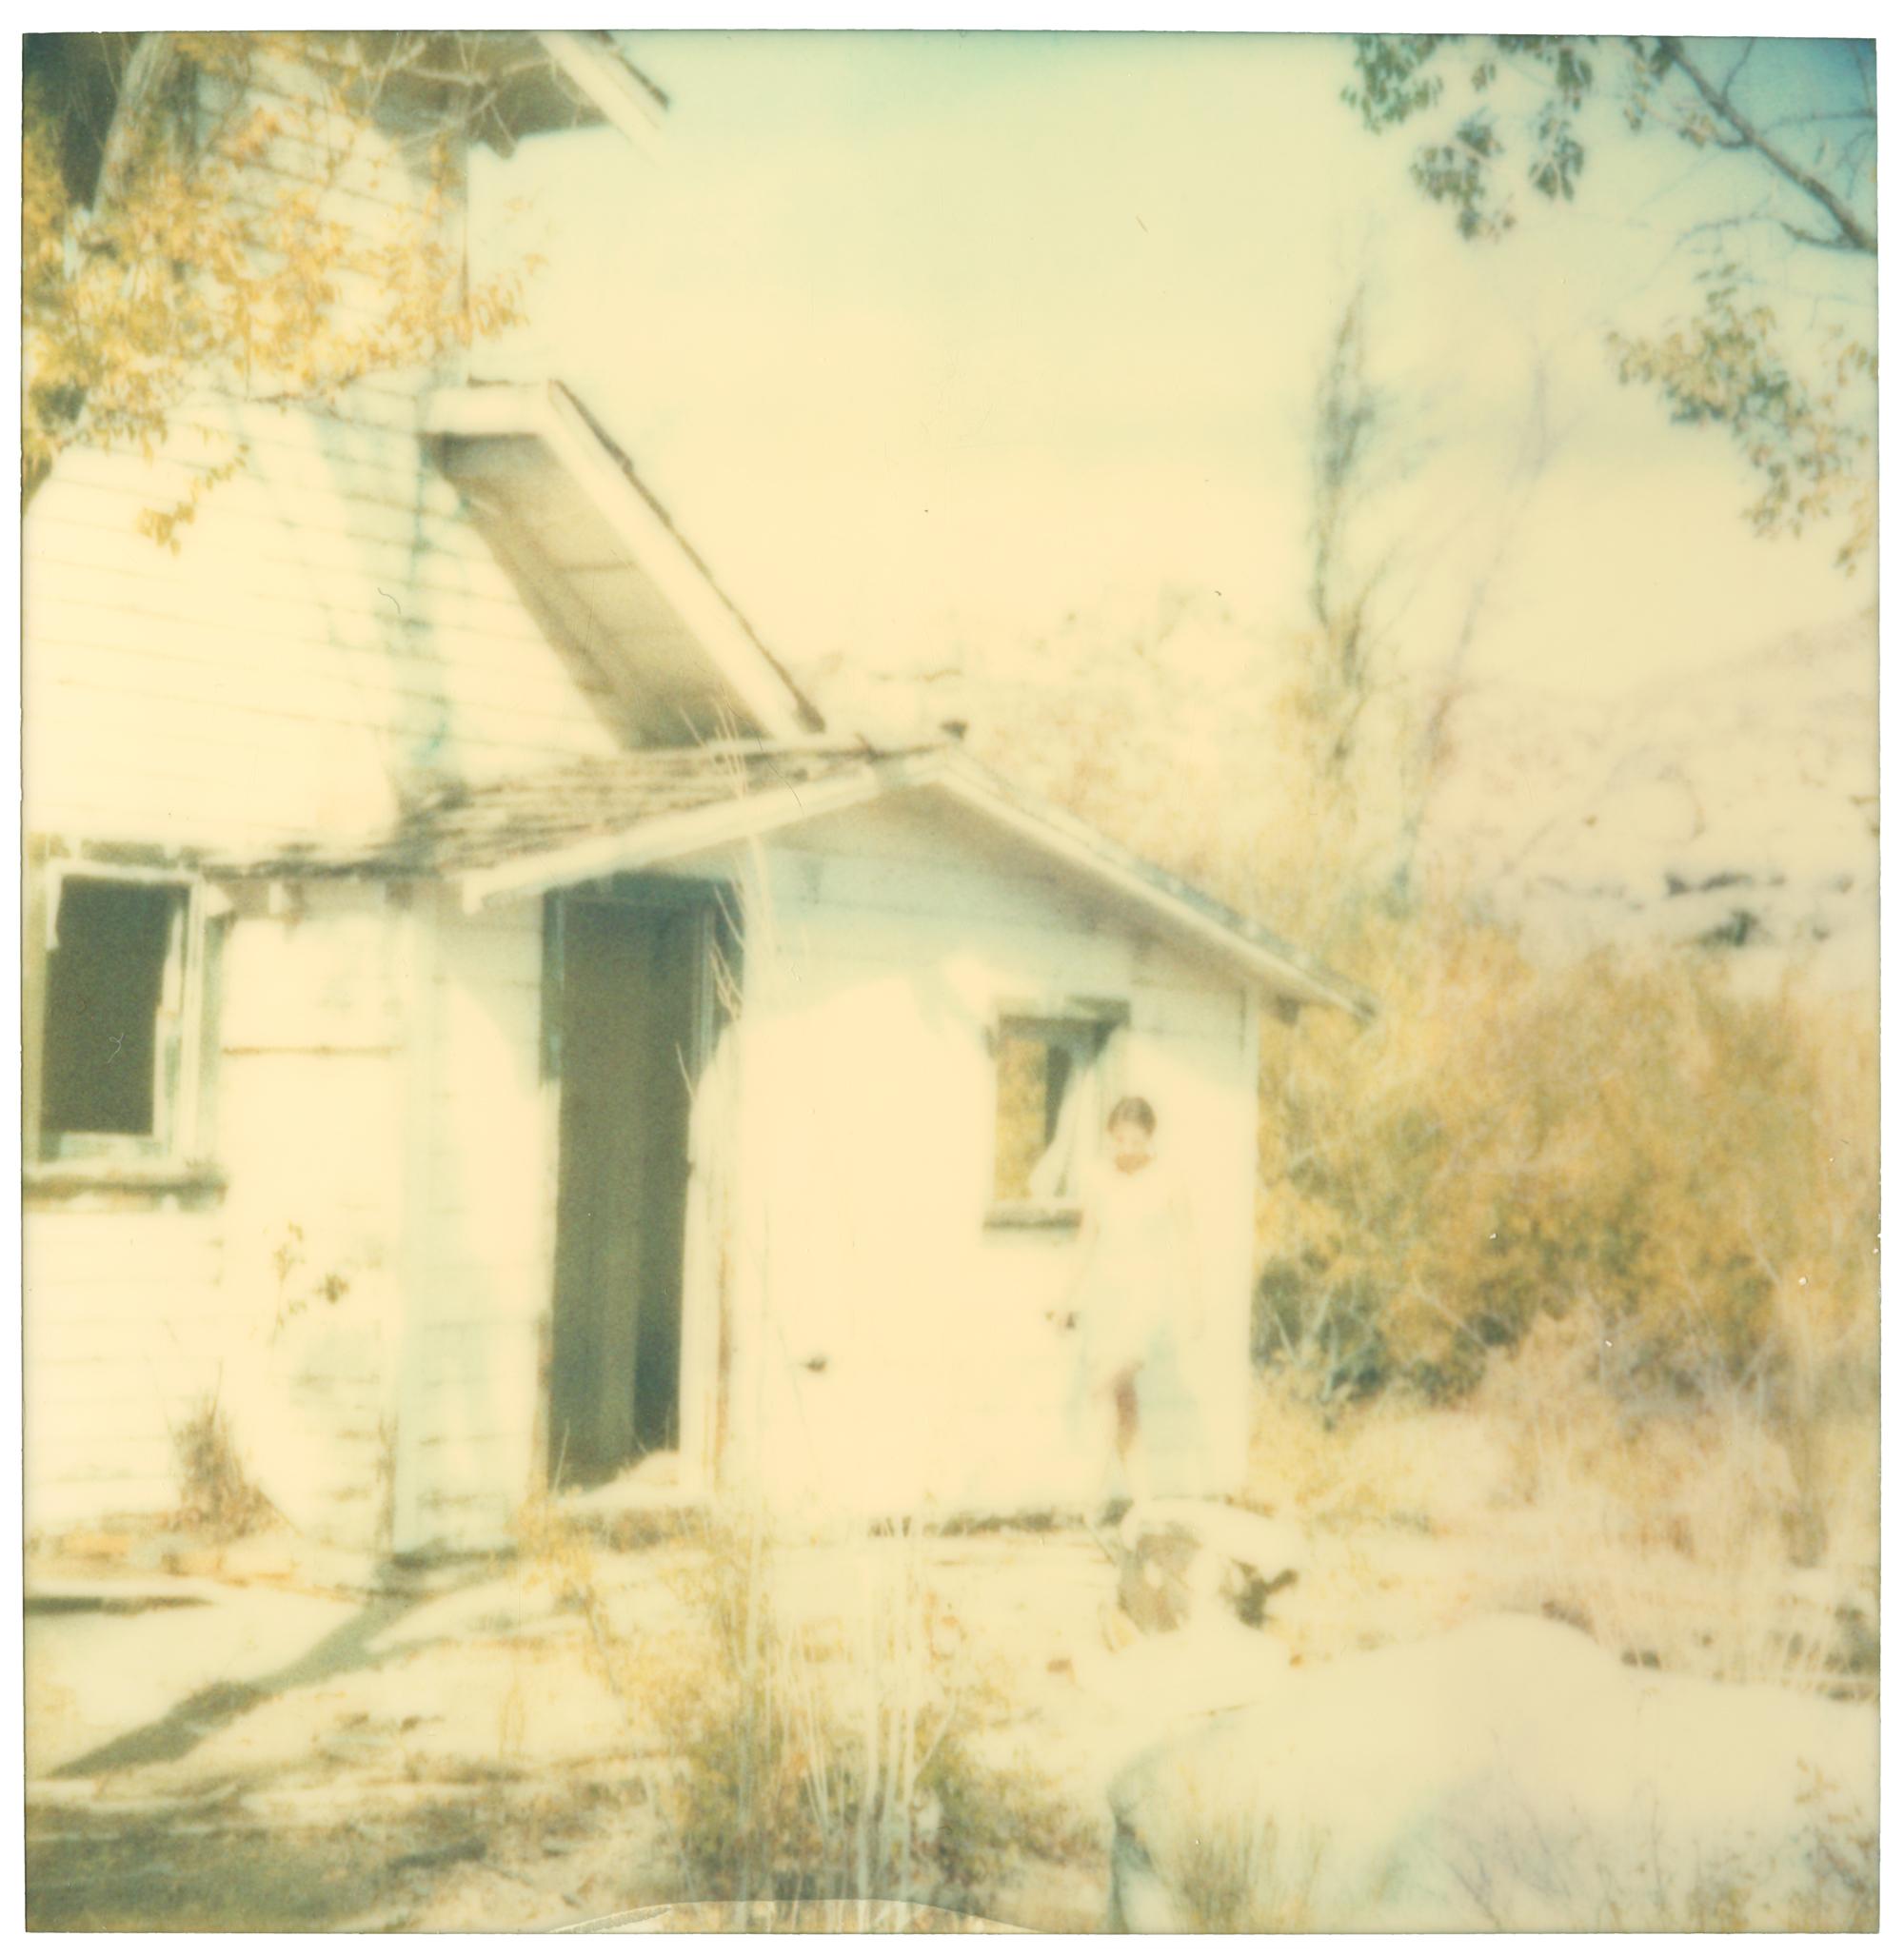 Last Season (Wastelands), diptych - Polaroid, Expired. Contemporary, Color - Beige Landscape Photograph by Stefanie Schneider